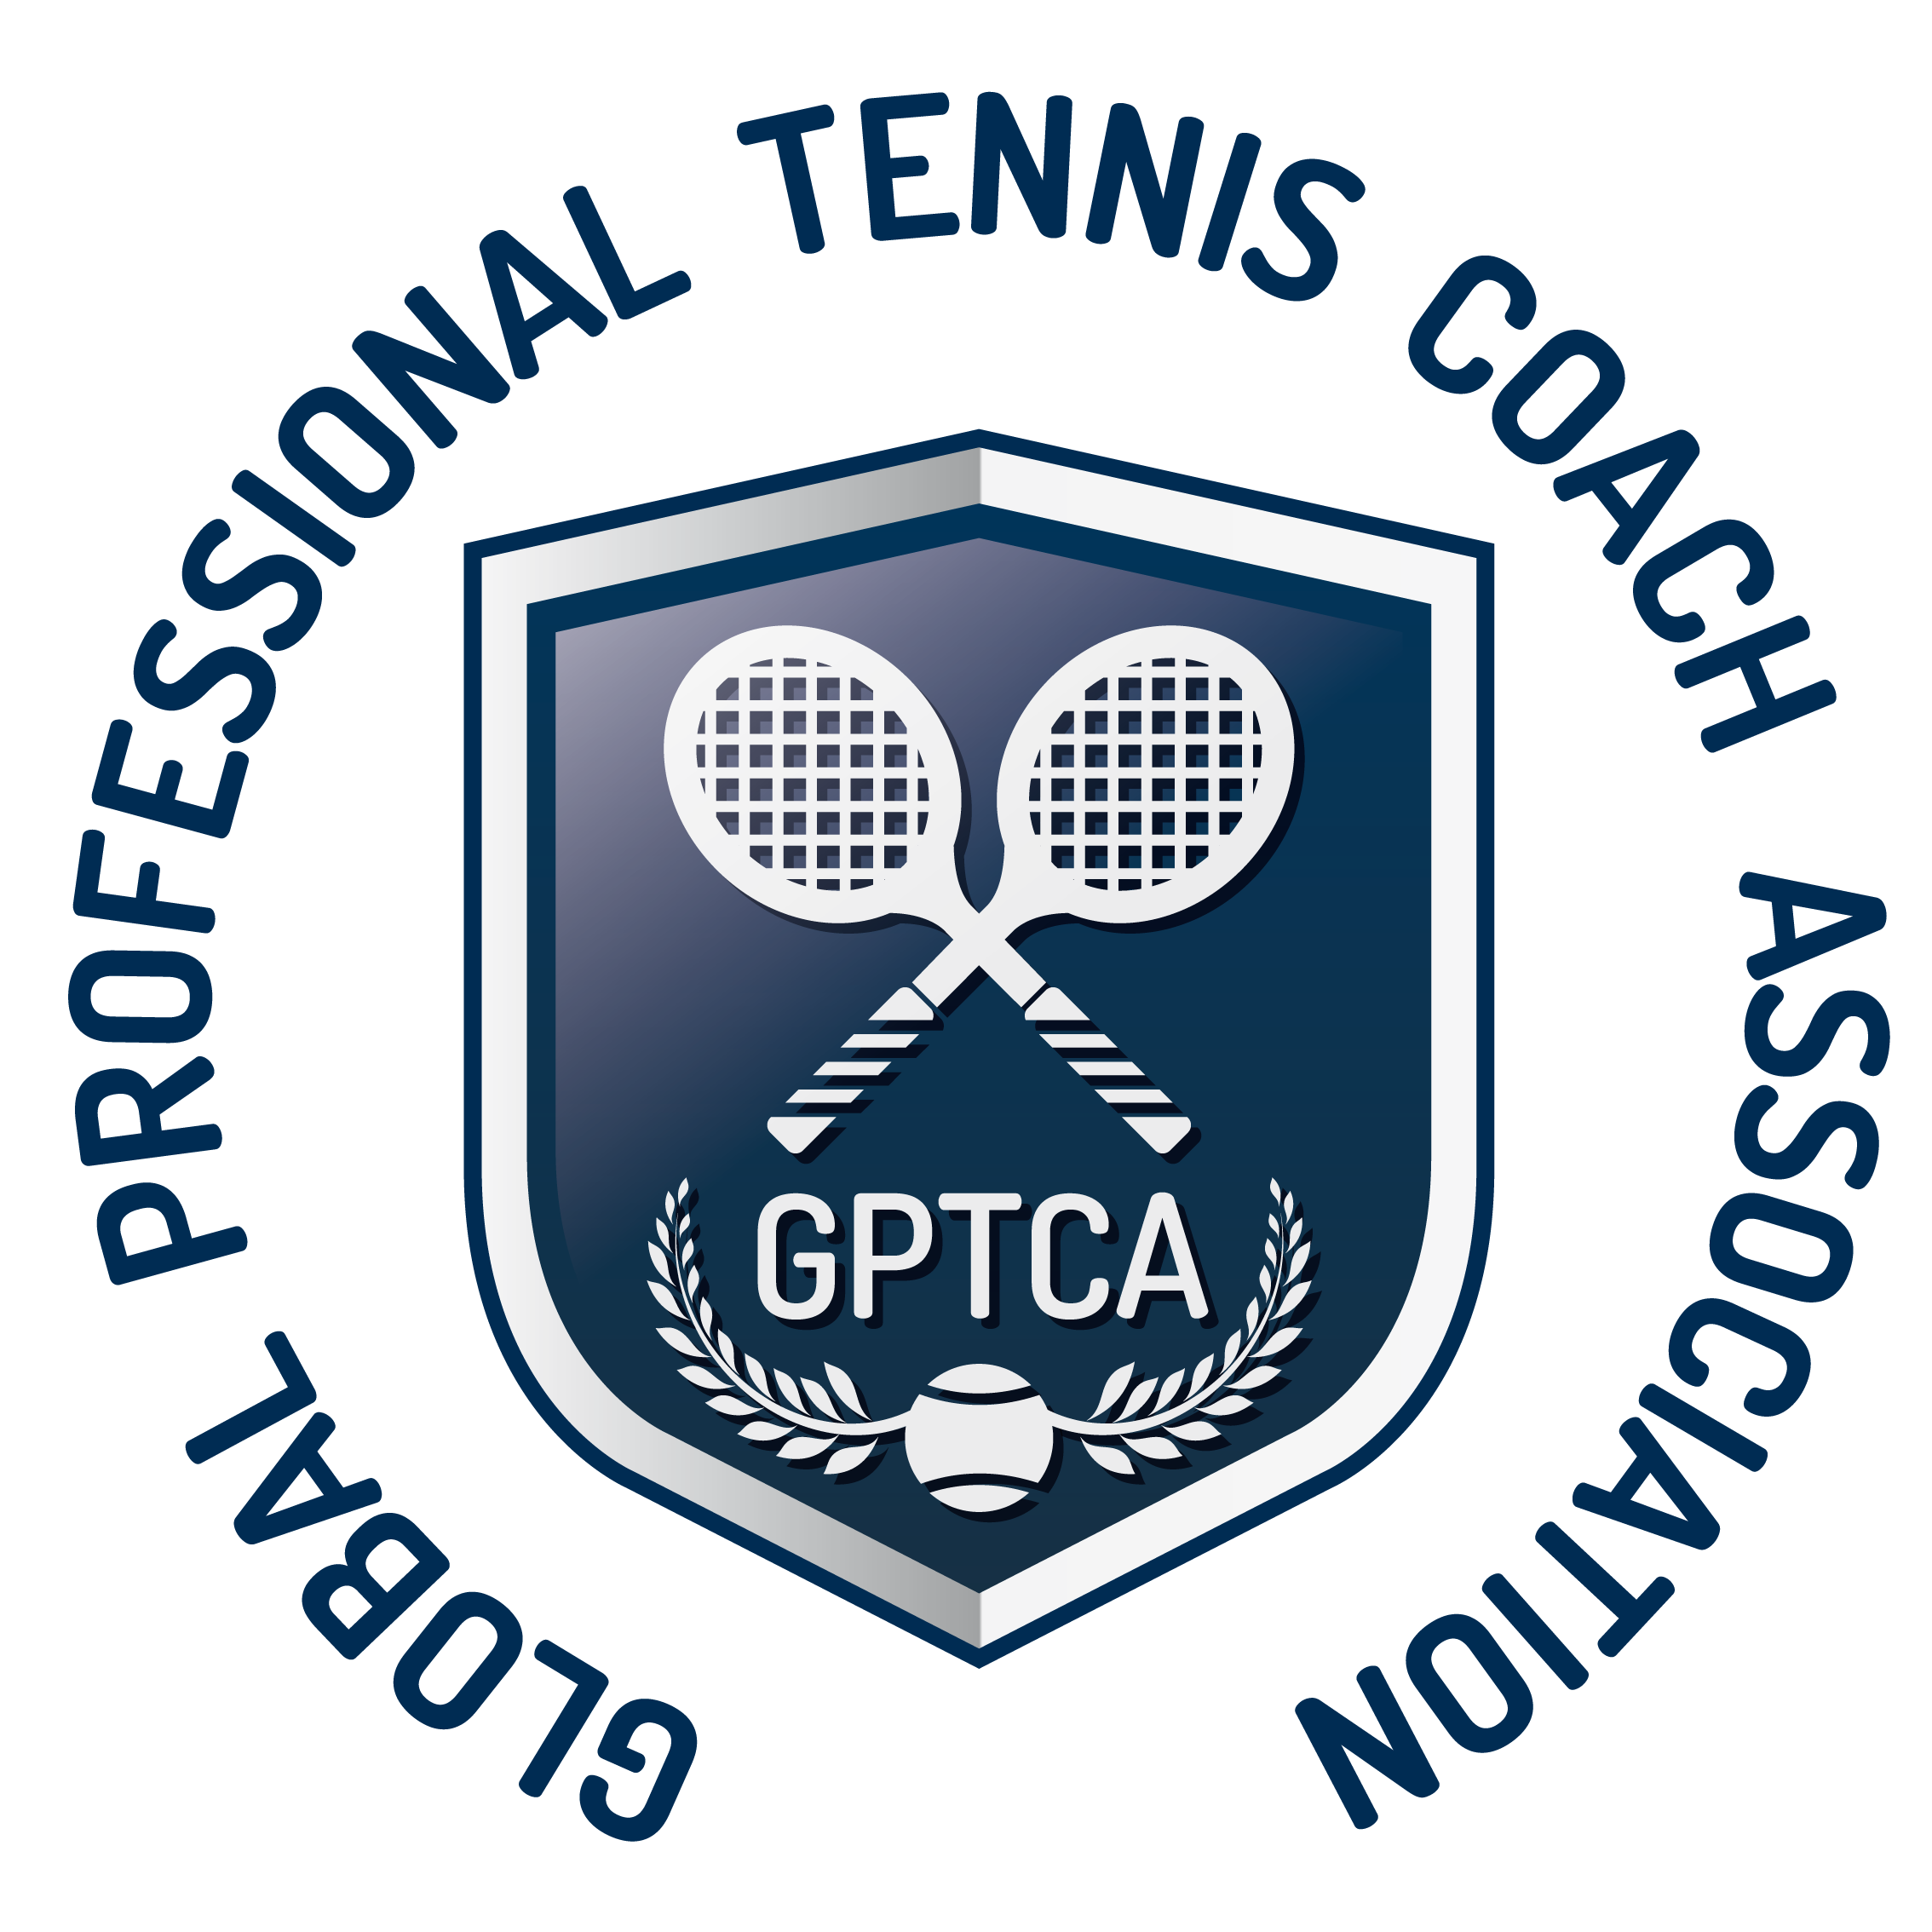 Global Professional Tennis Coach Association